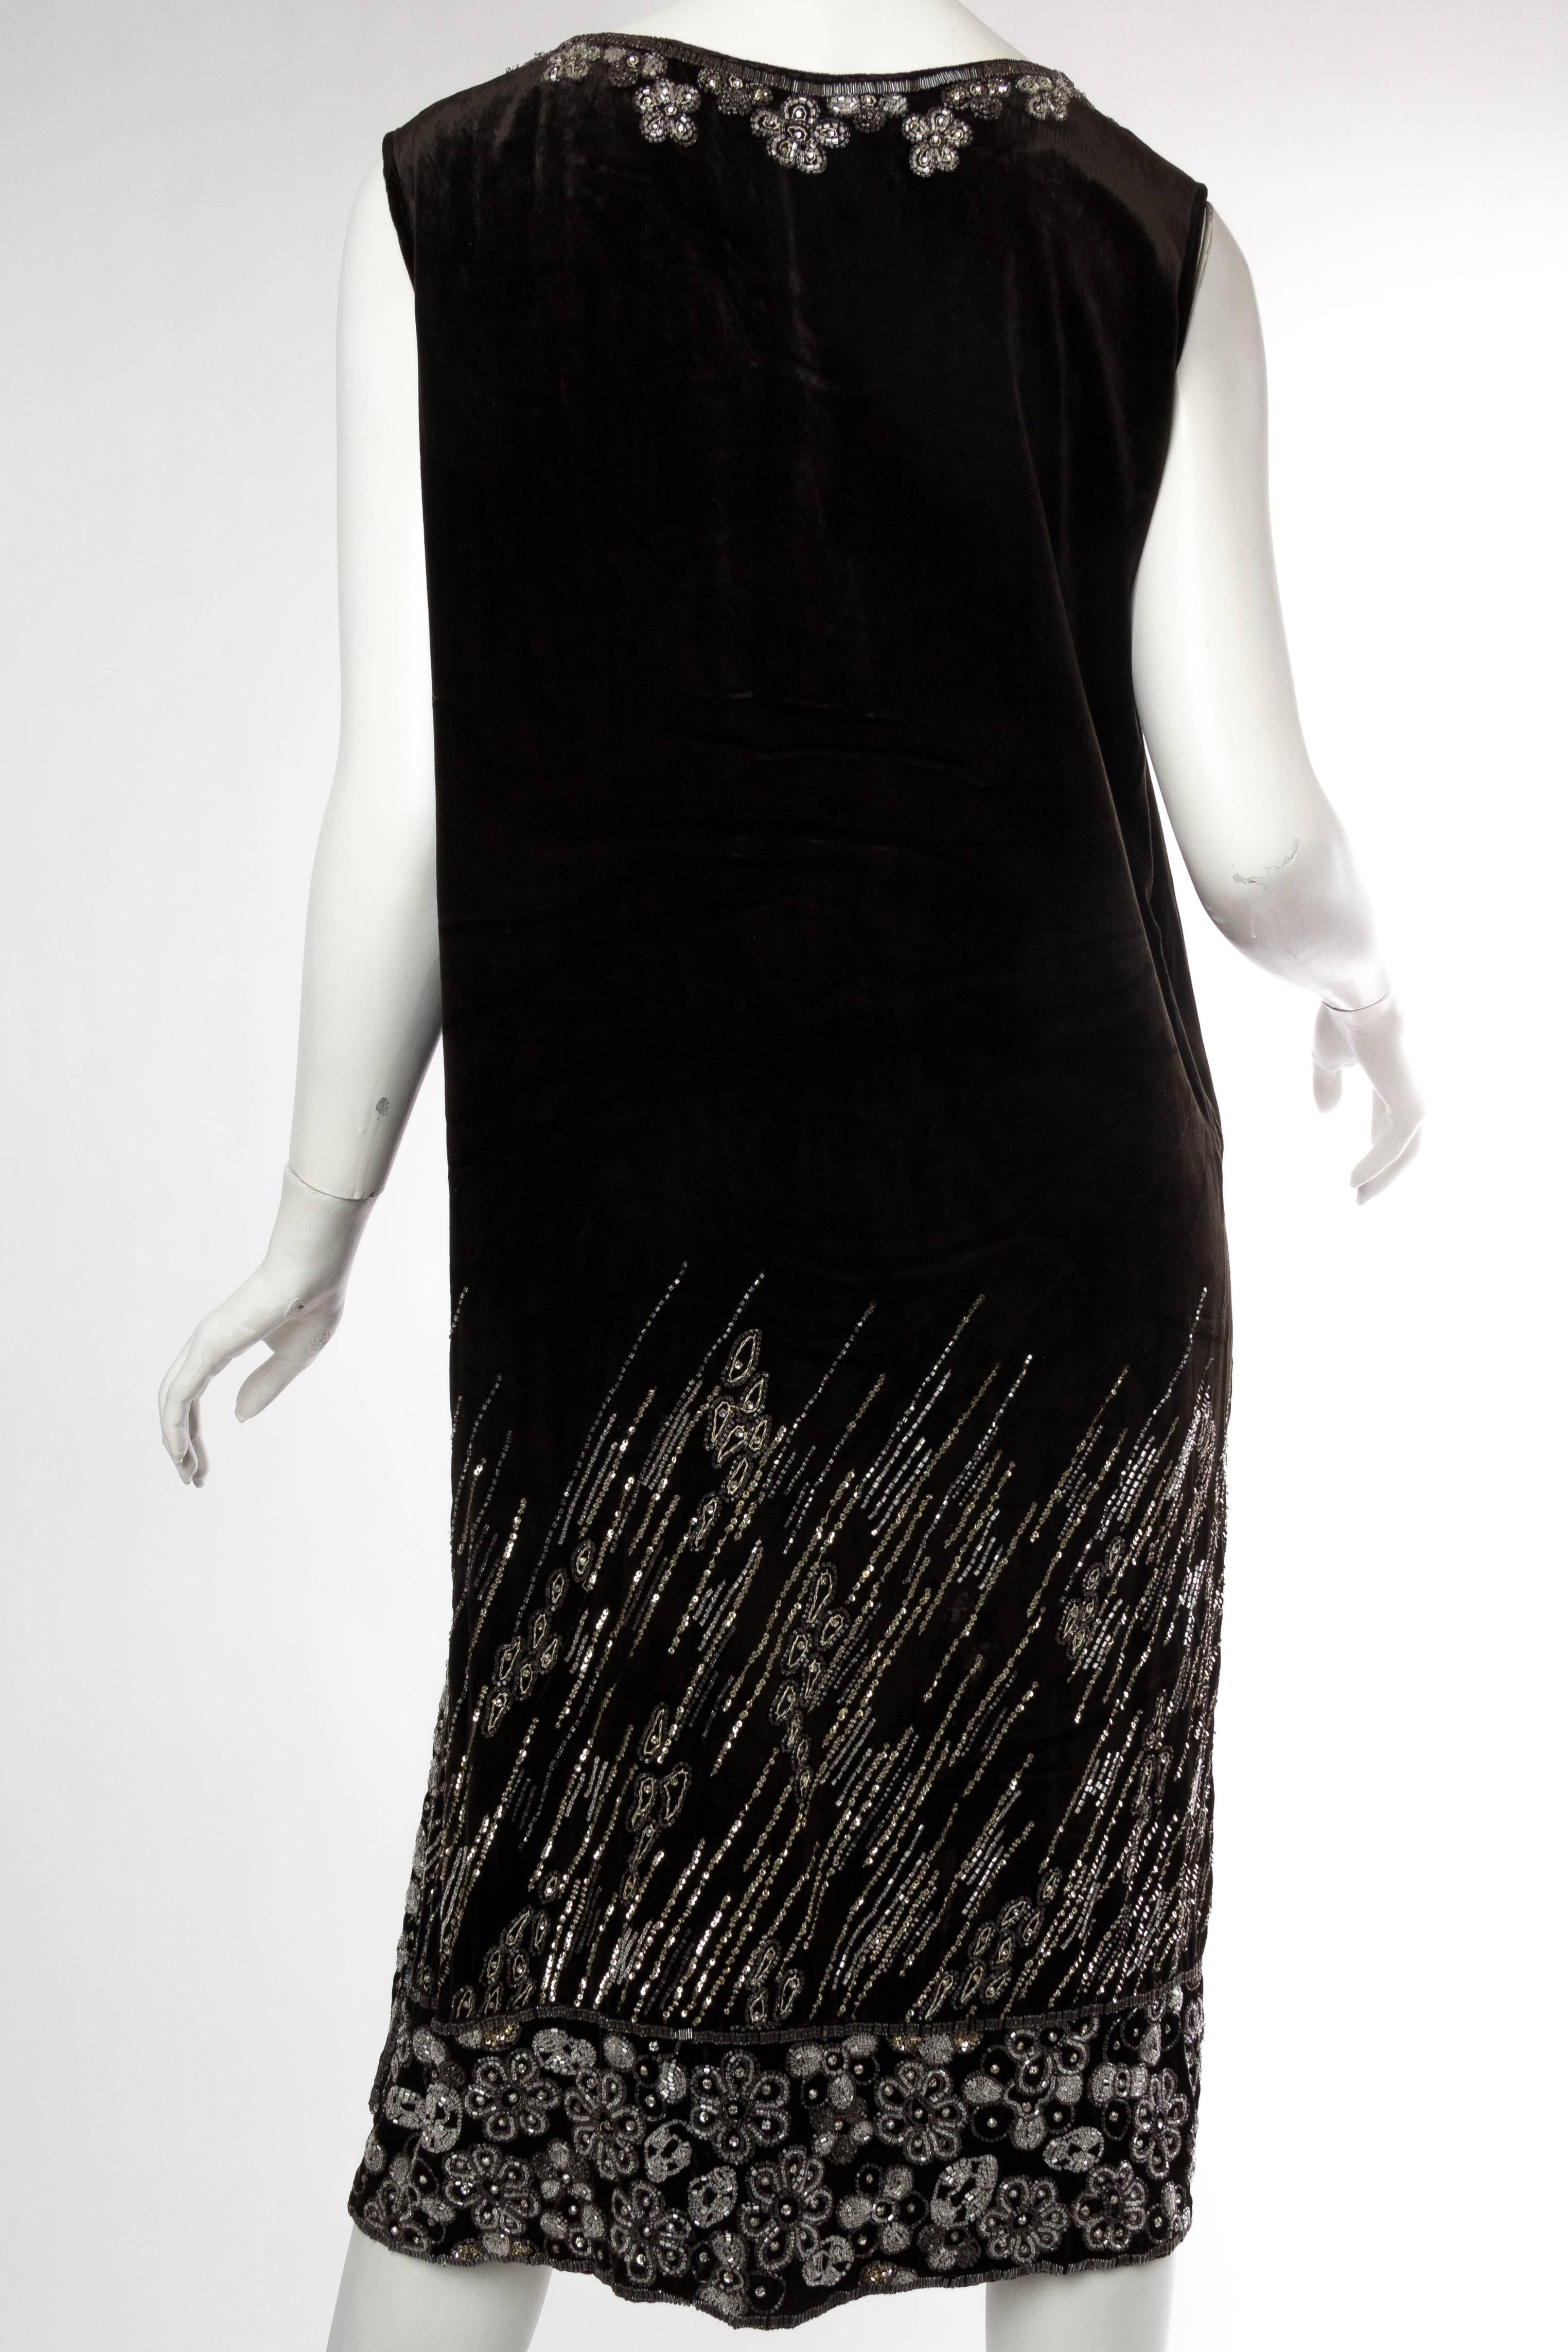 1920 wrap dress